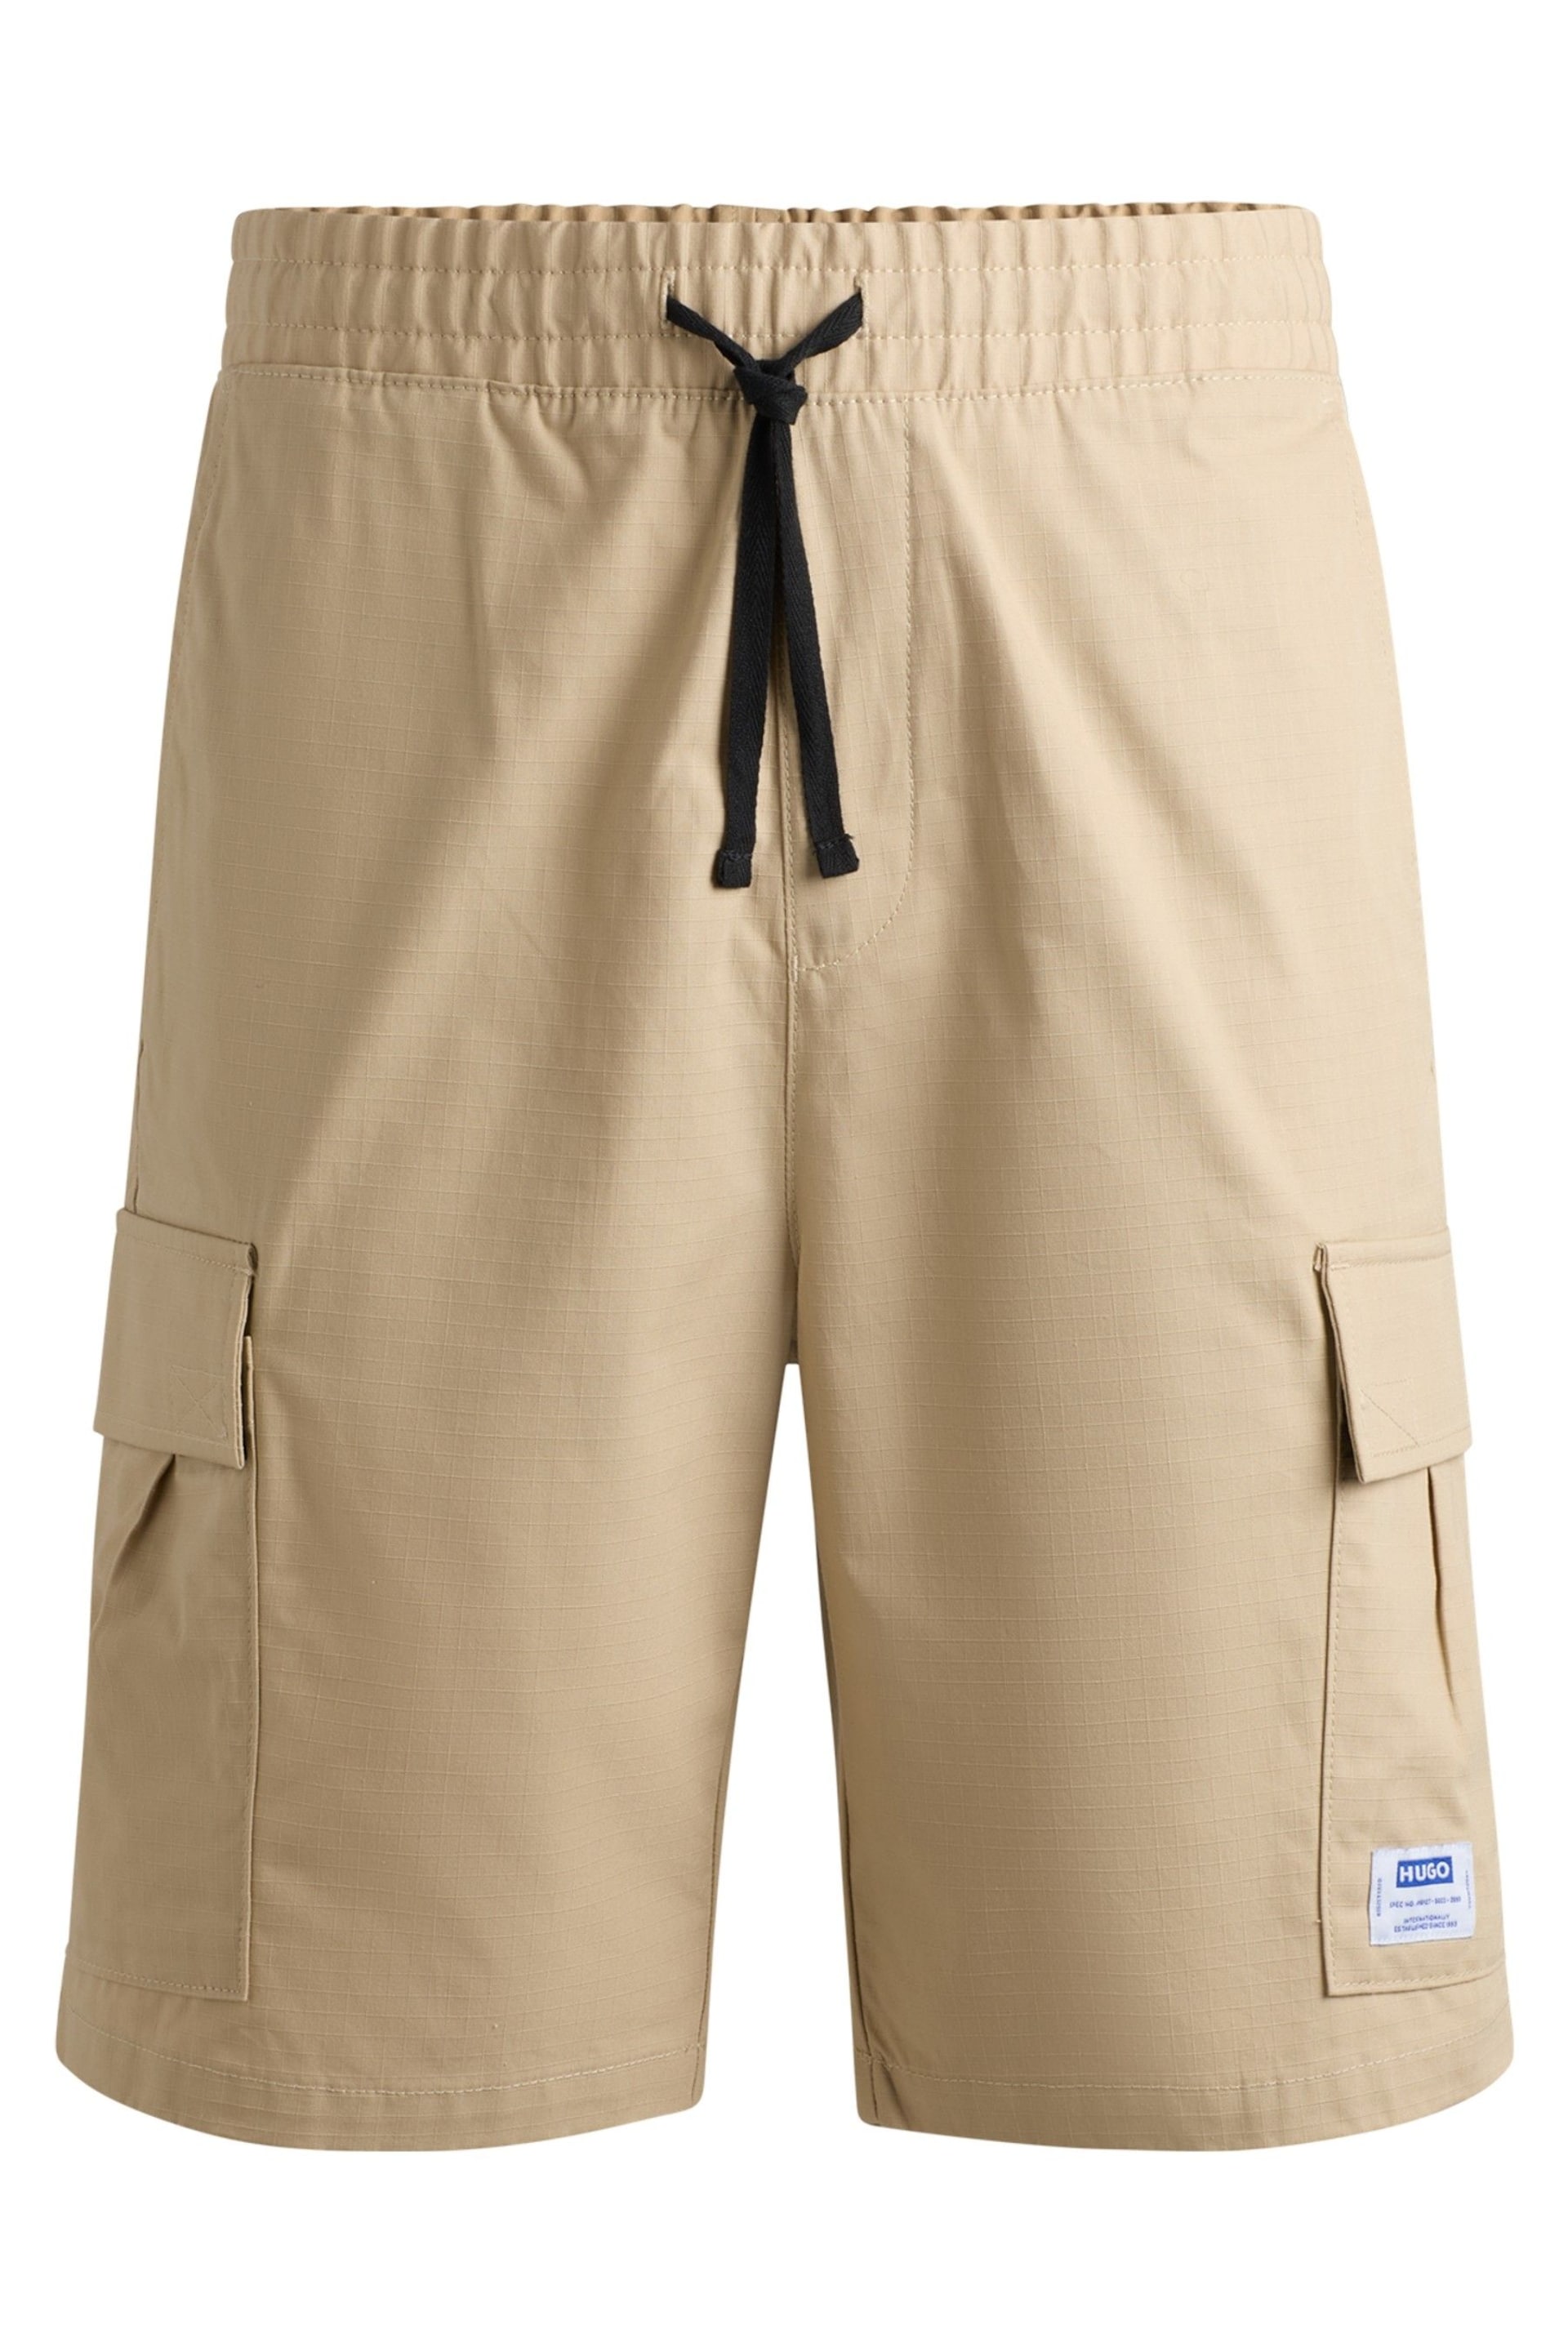 HUGO Brown Logo Patch Cotton Drawstrong Shorts - Image 5 of 5